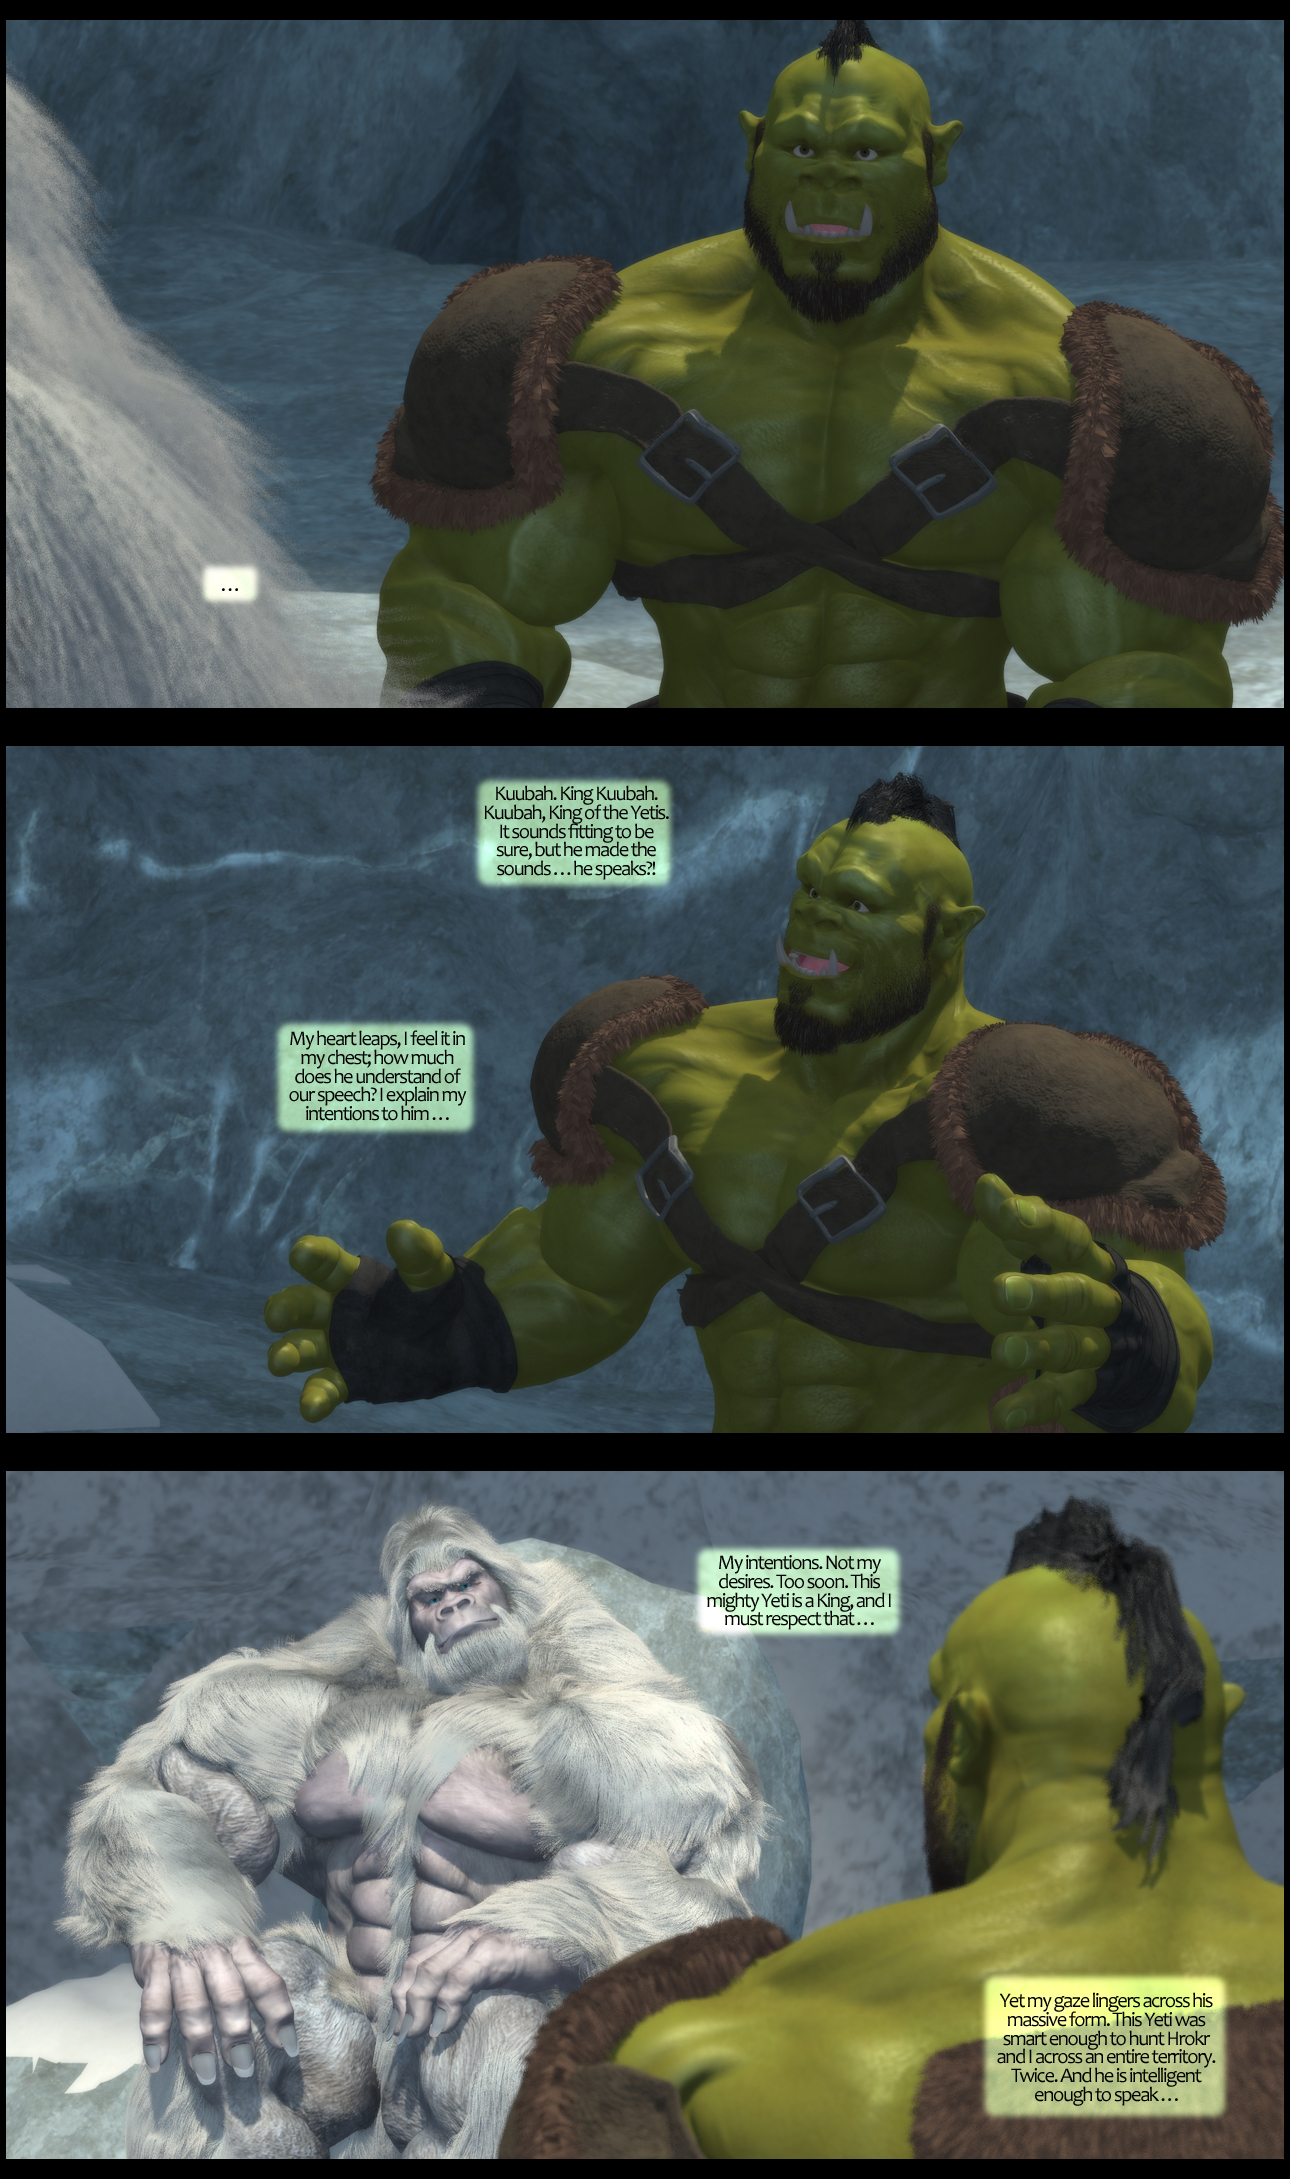 yeti vs hulk